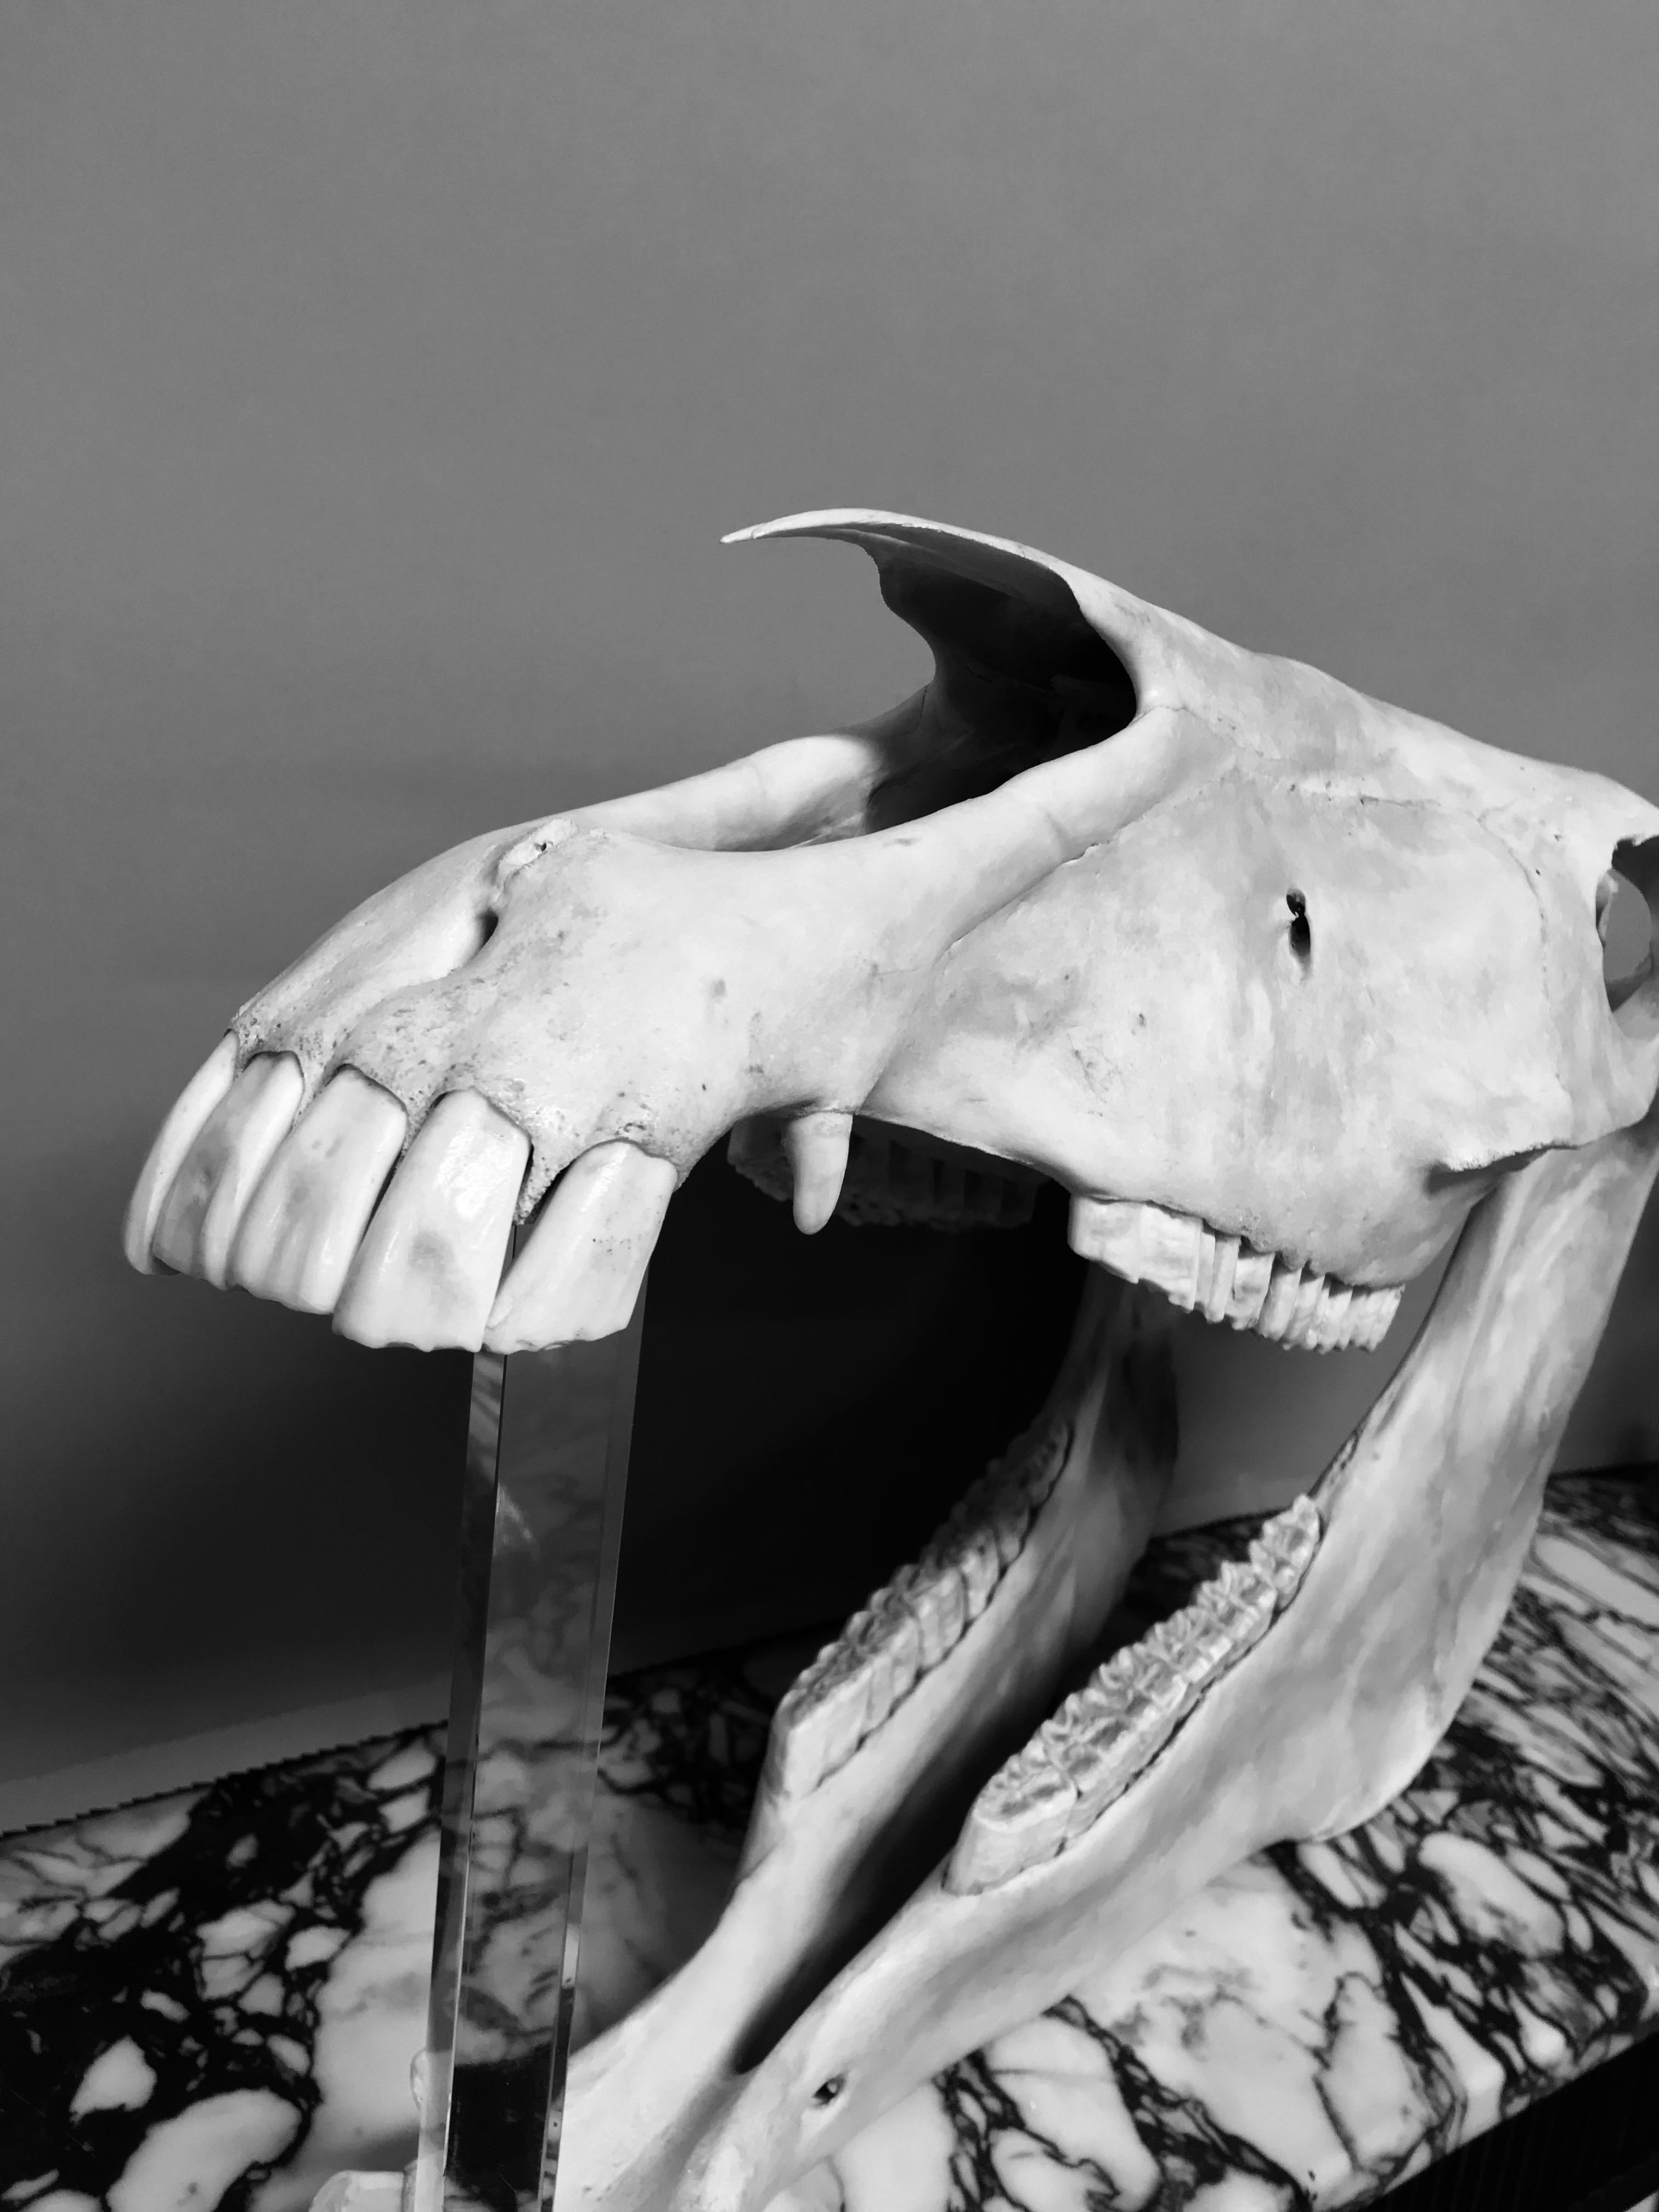 English Antique Horse Skull